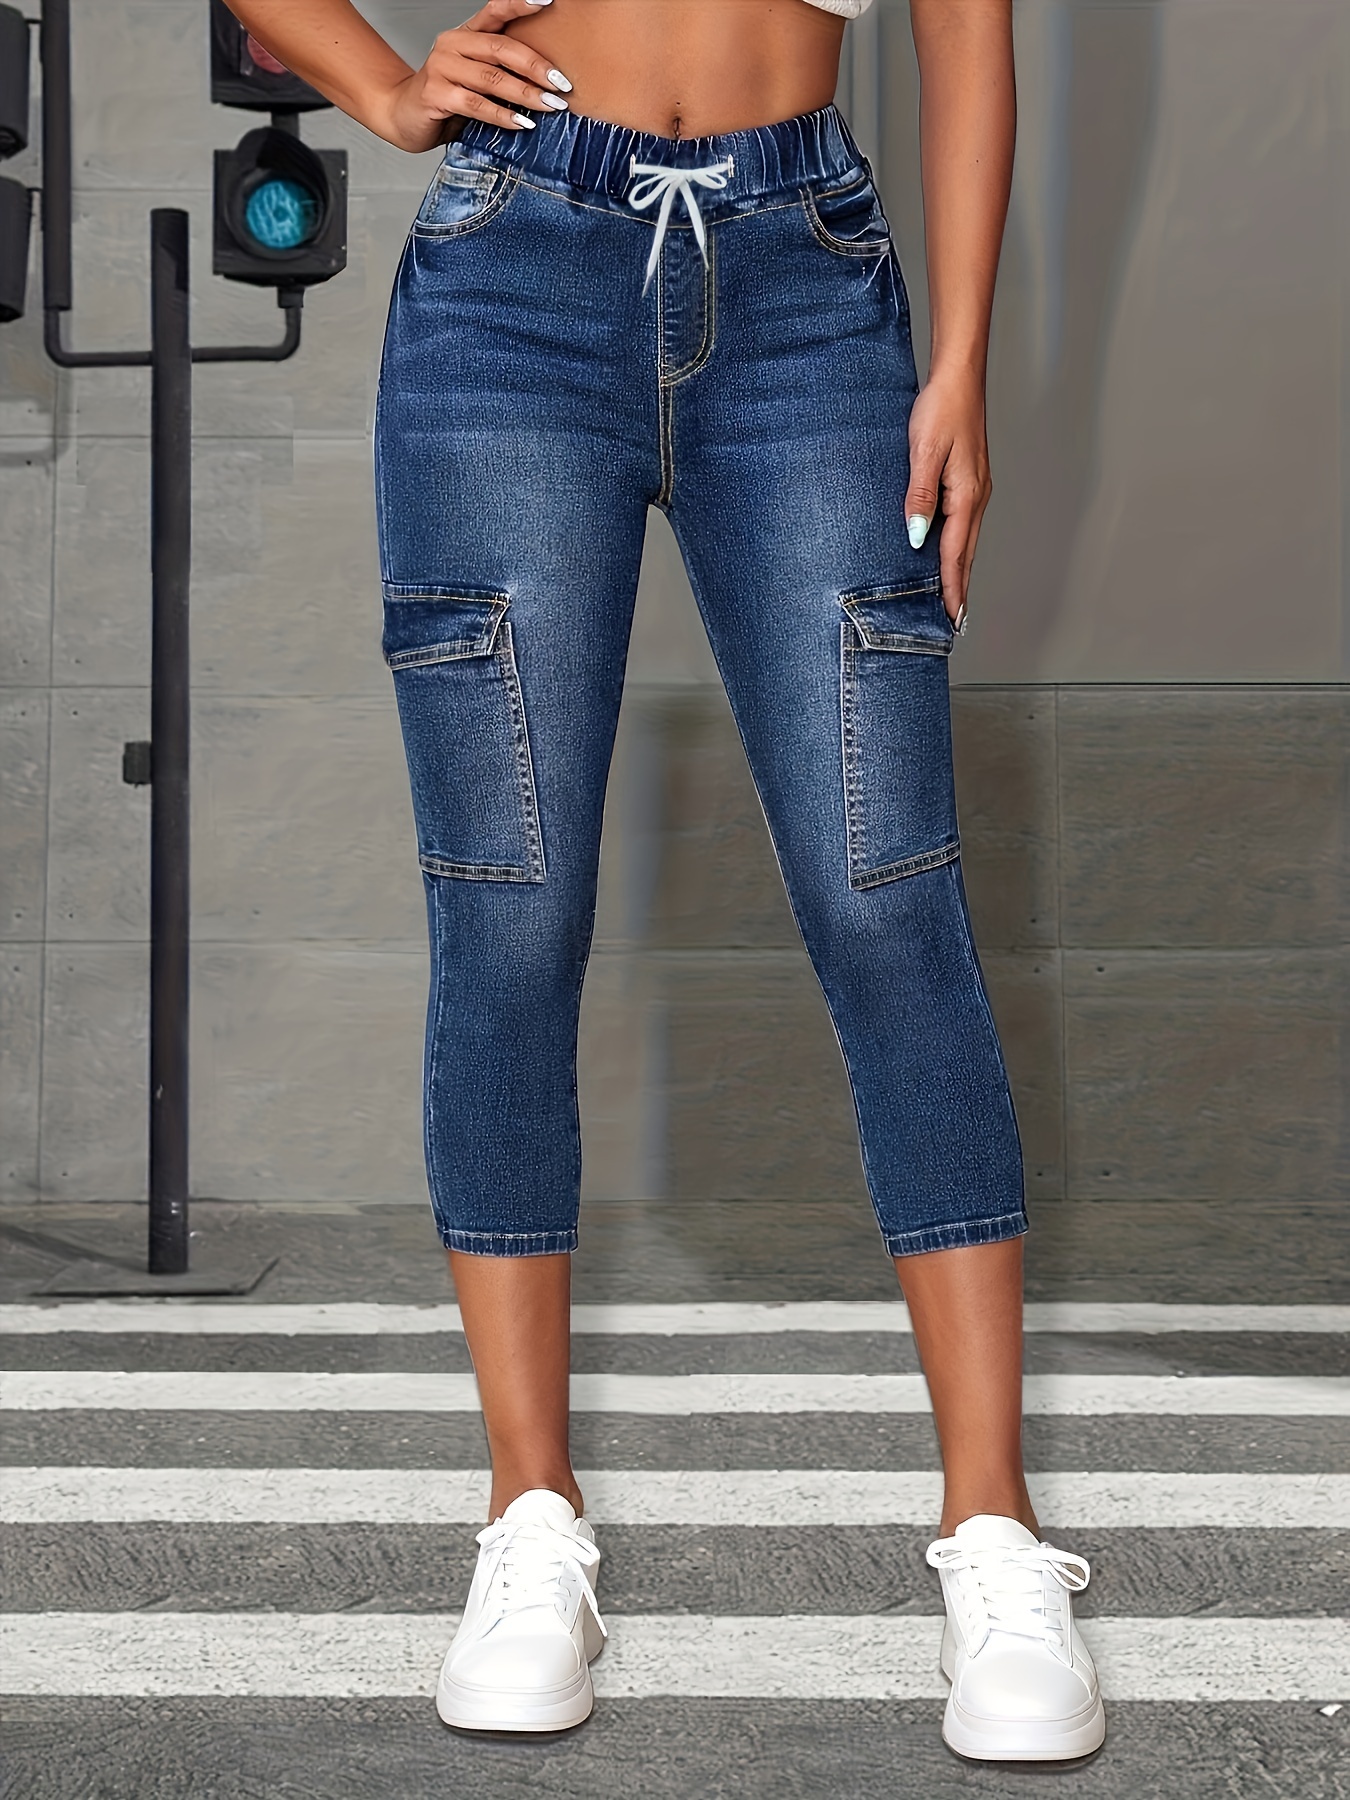 Conshvi Women's High Waisted Capris Jeans Trendy Skinny Stretch Capri Jeans  Elastic Waist Drawstring Denim Capris Pants, Blue, Small at  Women's  Jeans store